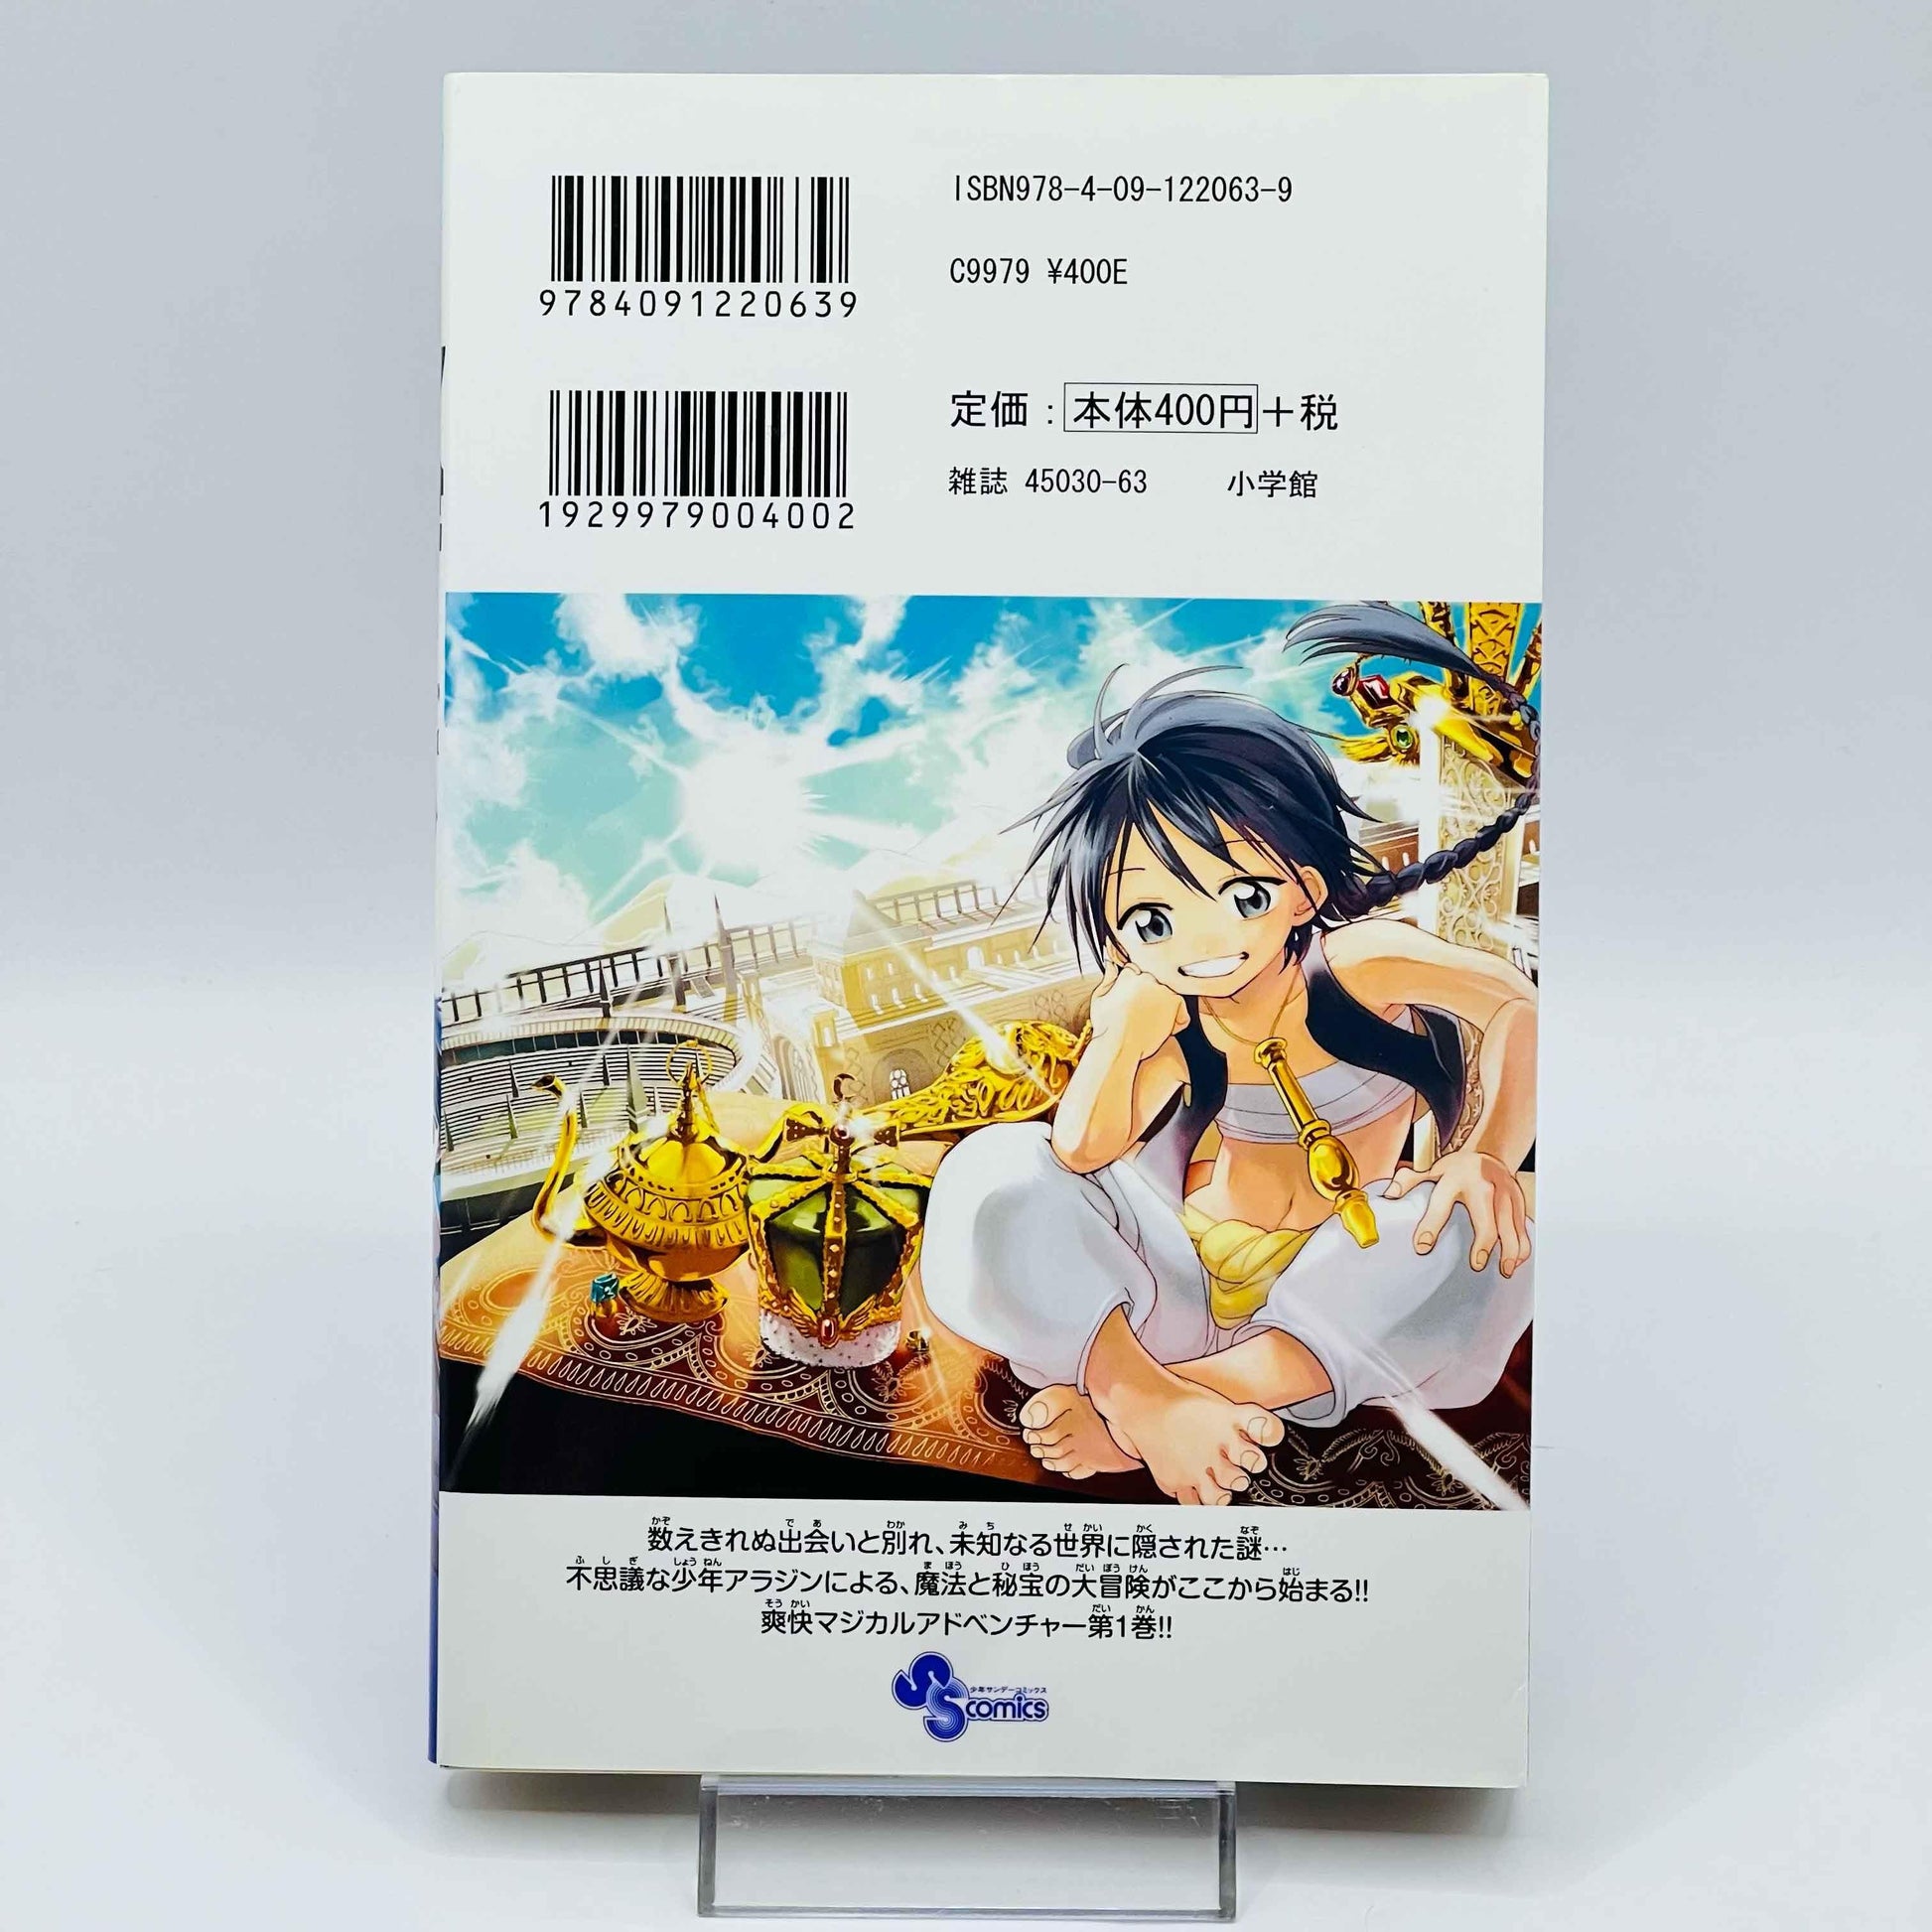 Magi - The Labyrinth of Magic - Volume 01 - 1stPrint.net - 1st First Print Edition Manga Store - M-MAGI-01-001